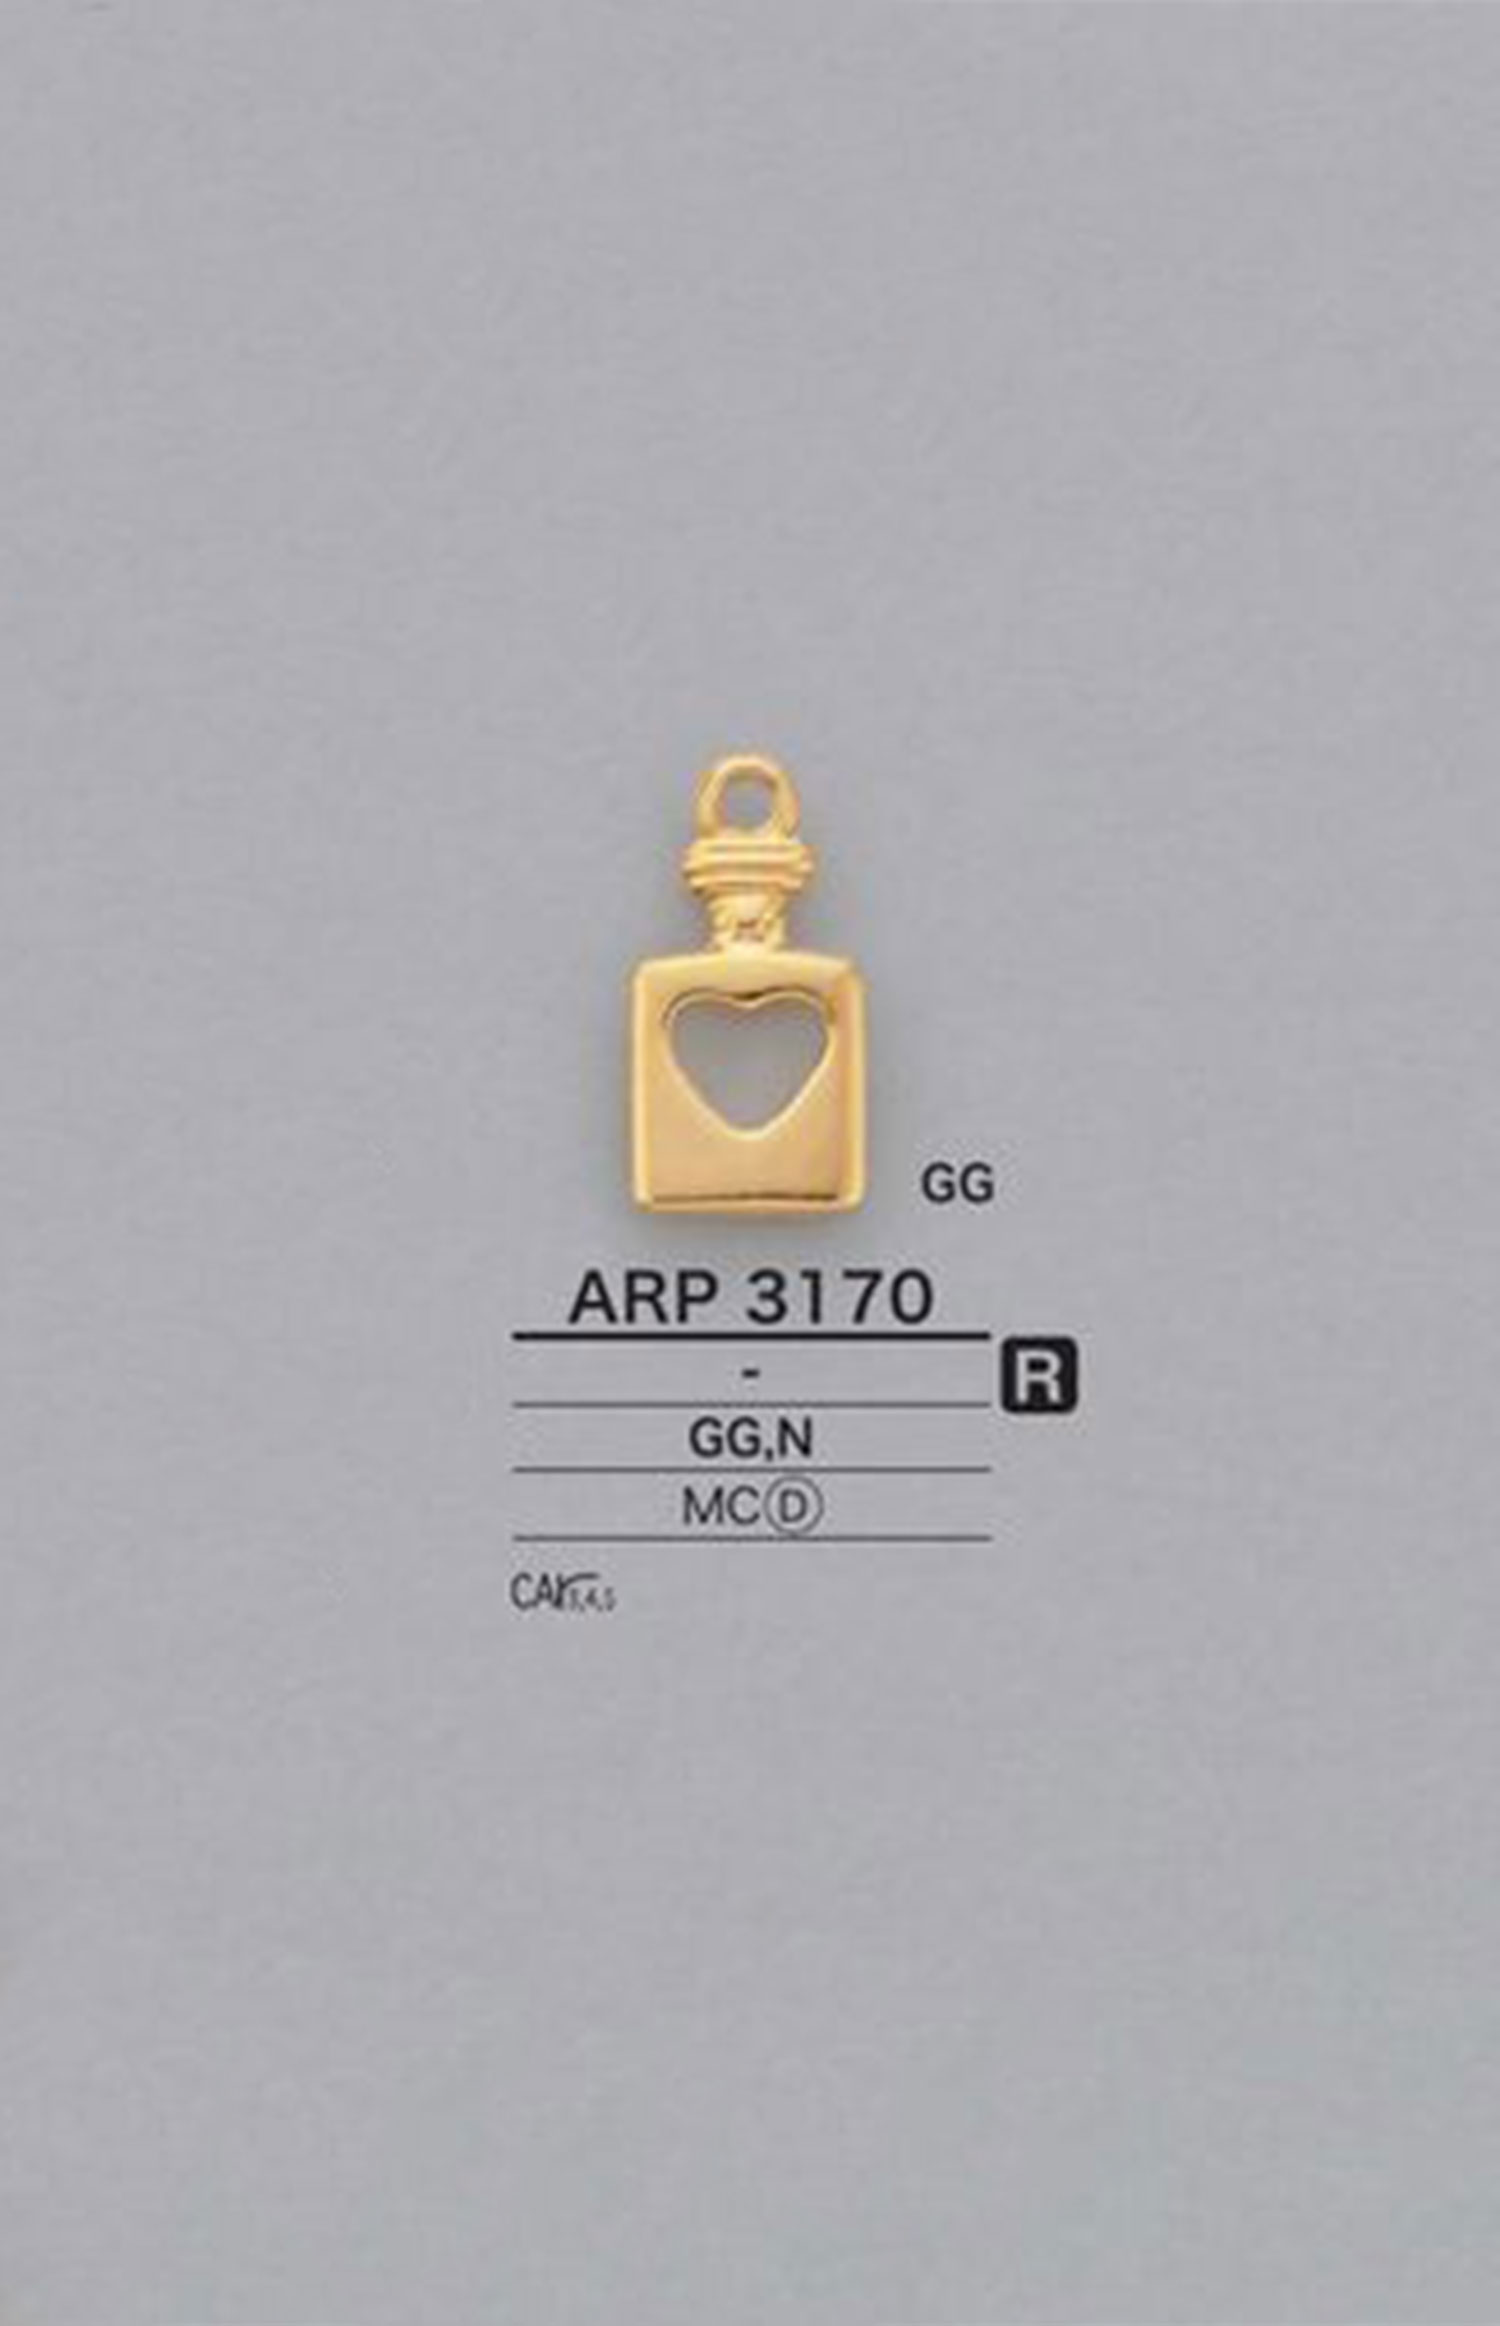 ARP3170 Heart Zipper Point (Pull Tab) IRIS